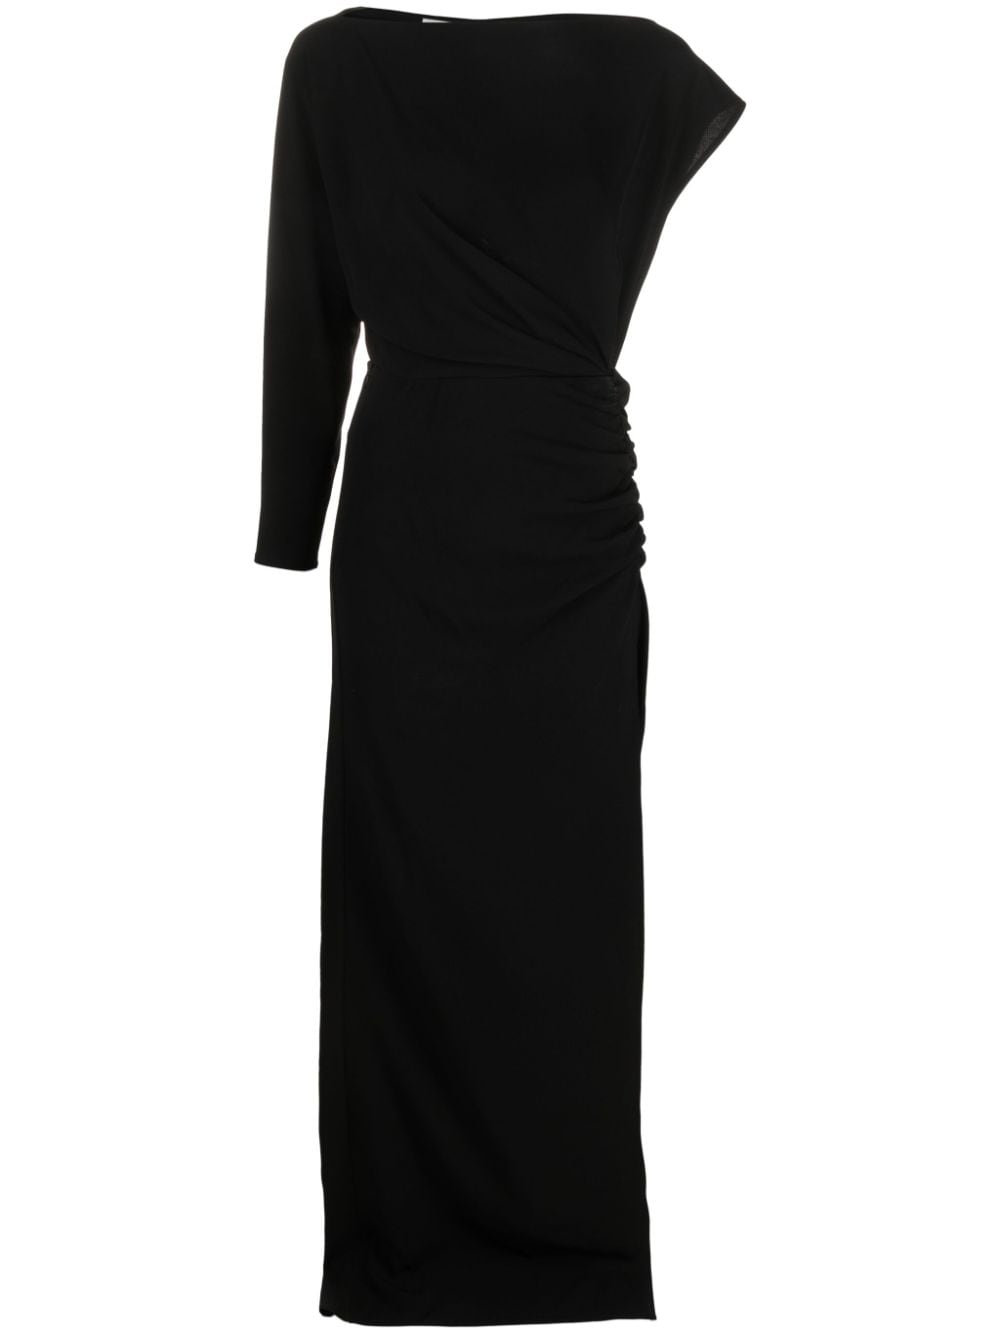 REV Asymmetrische jurk Zwart